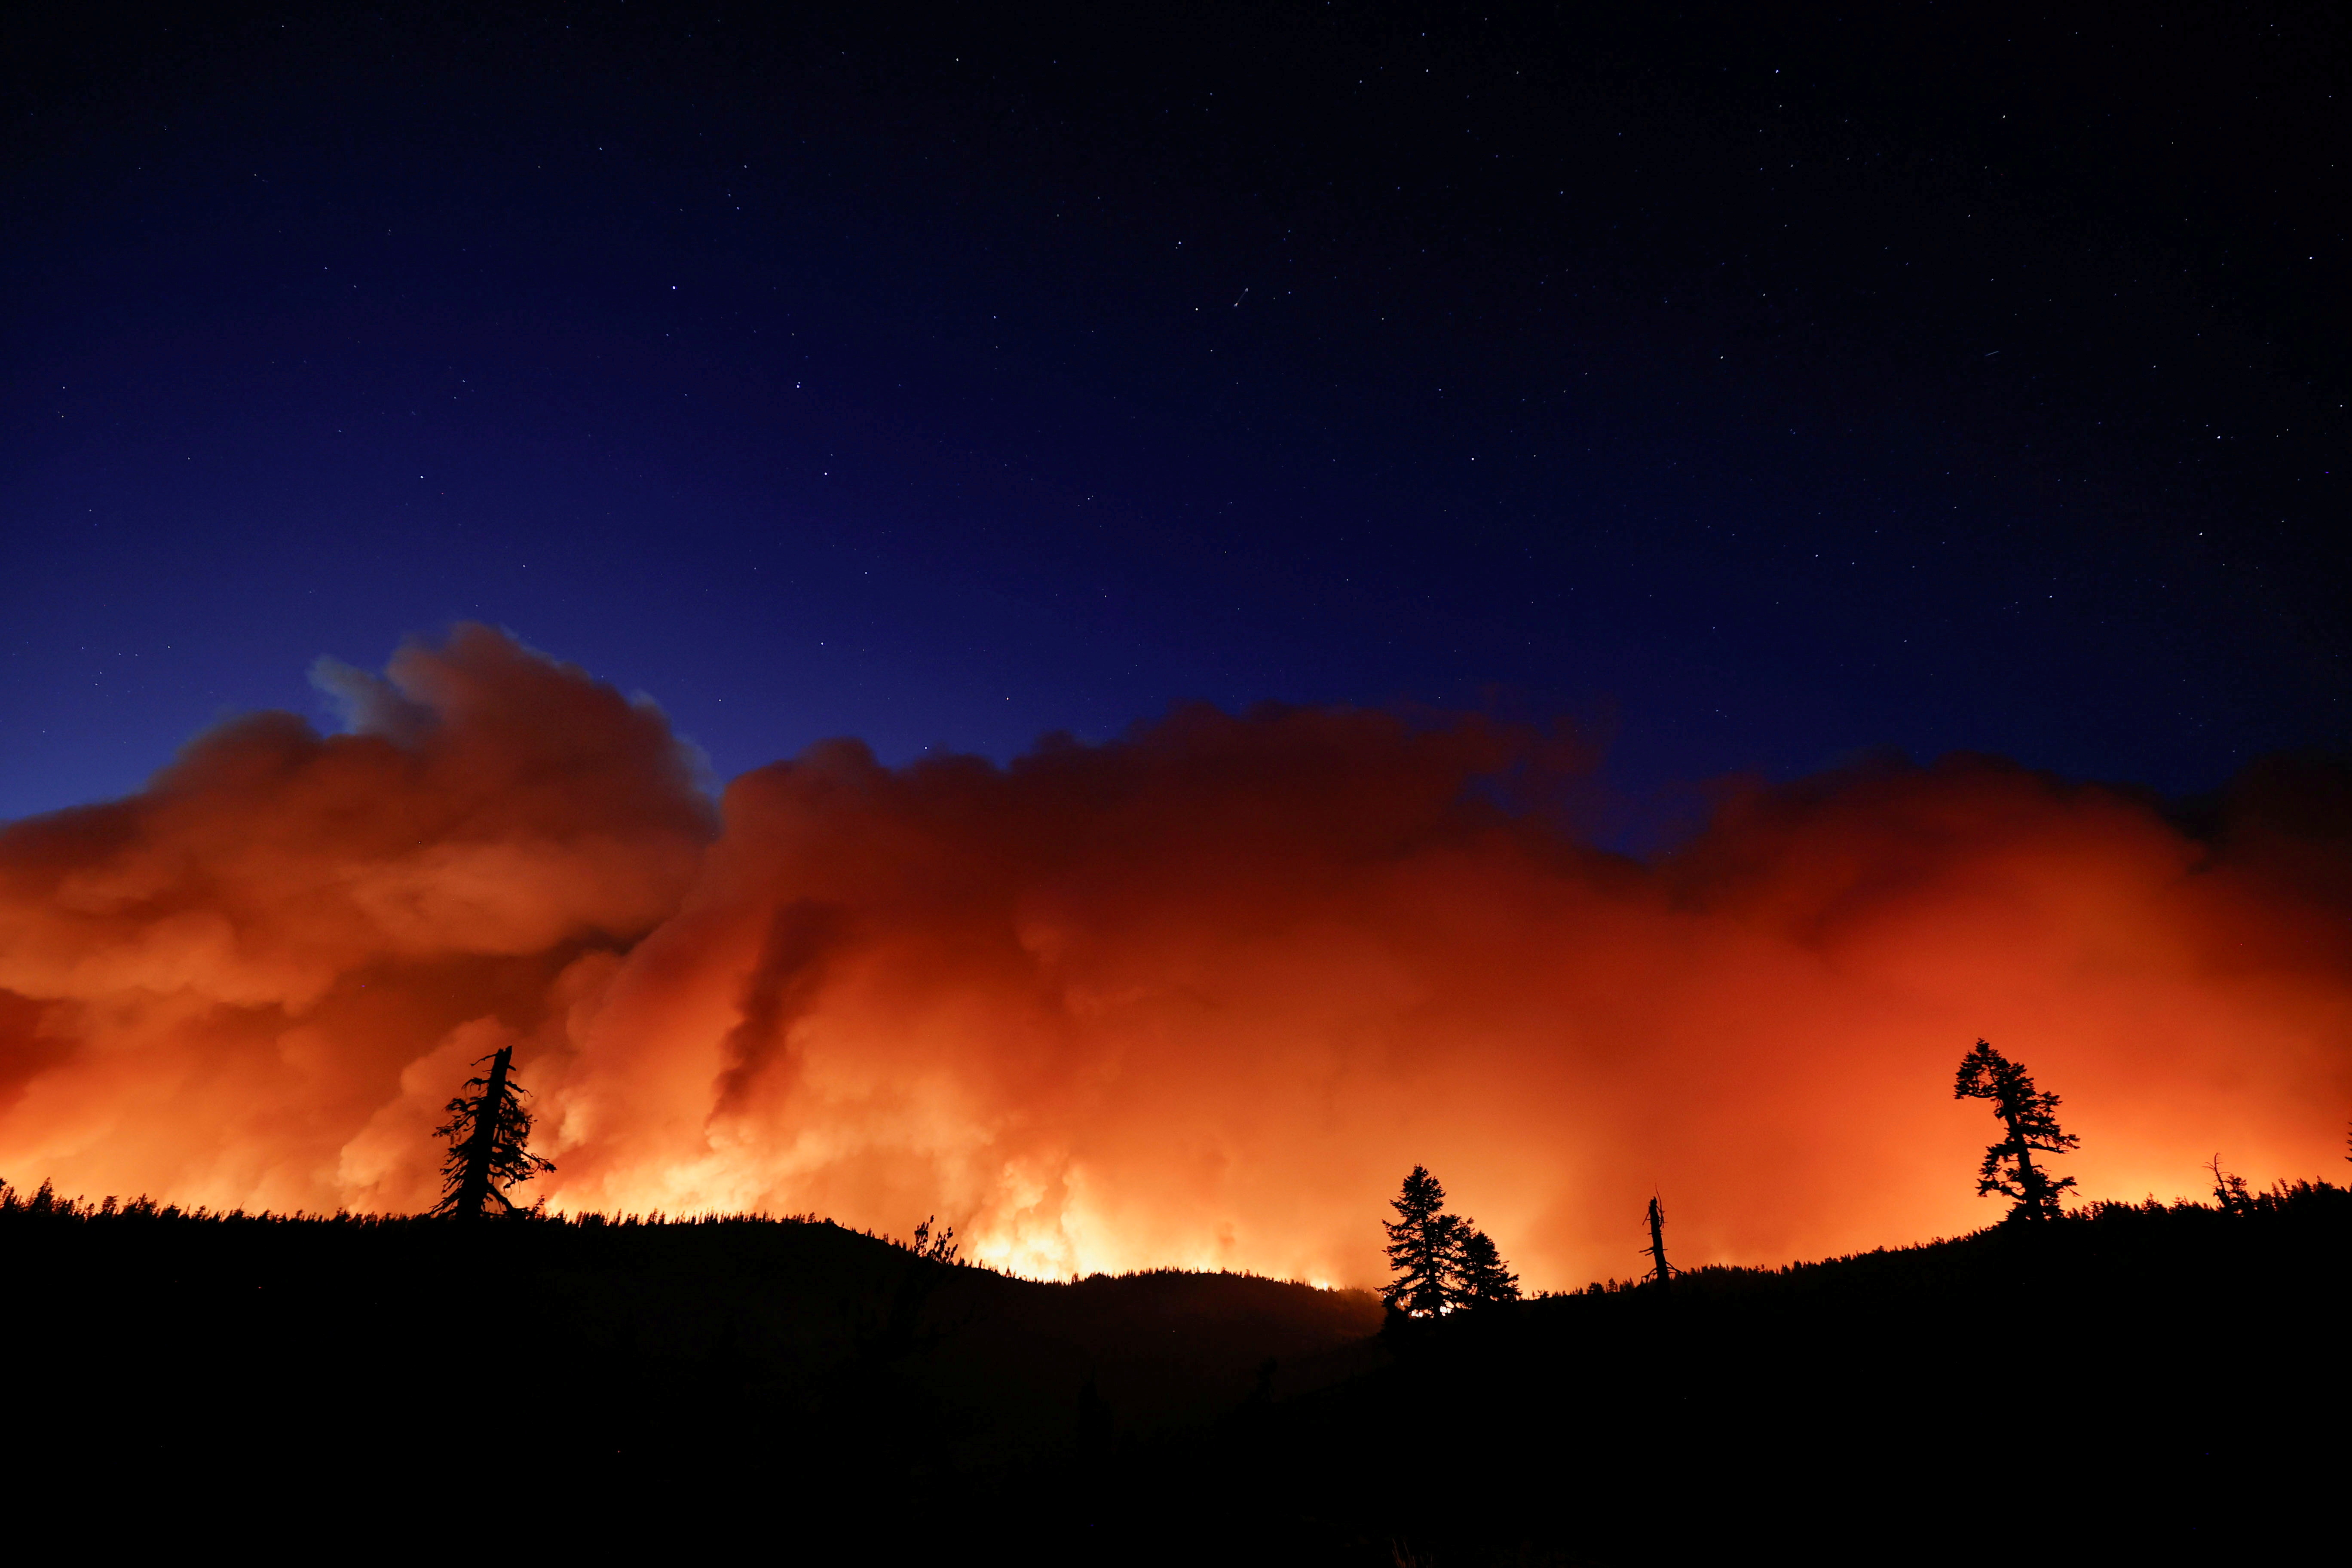 Caldor Fire burns near Pioneer, California